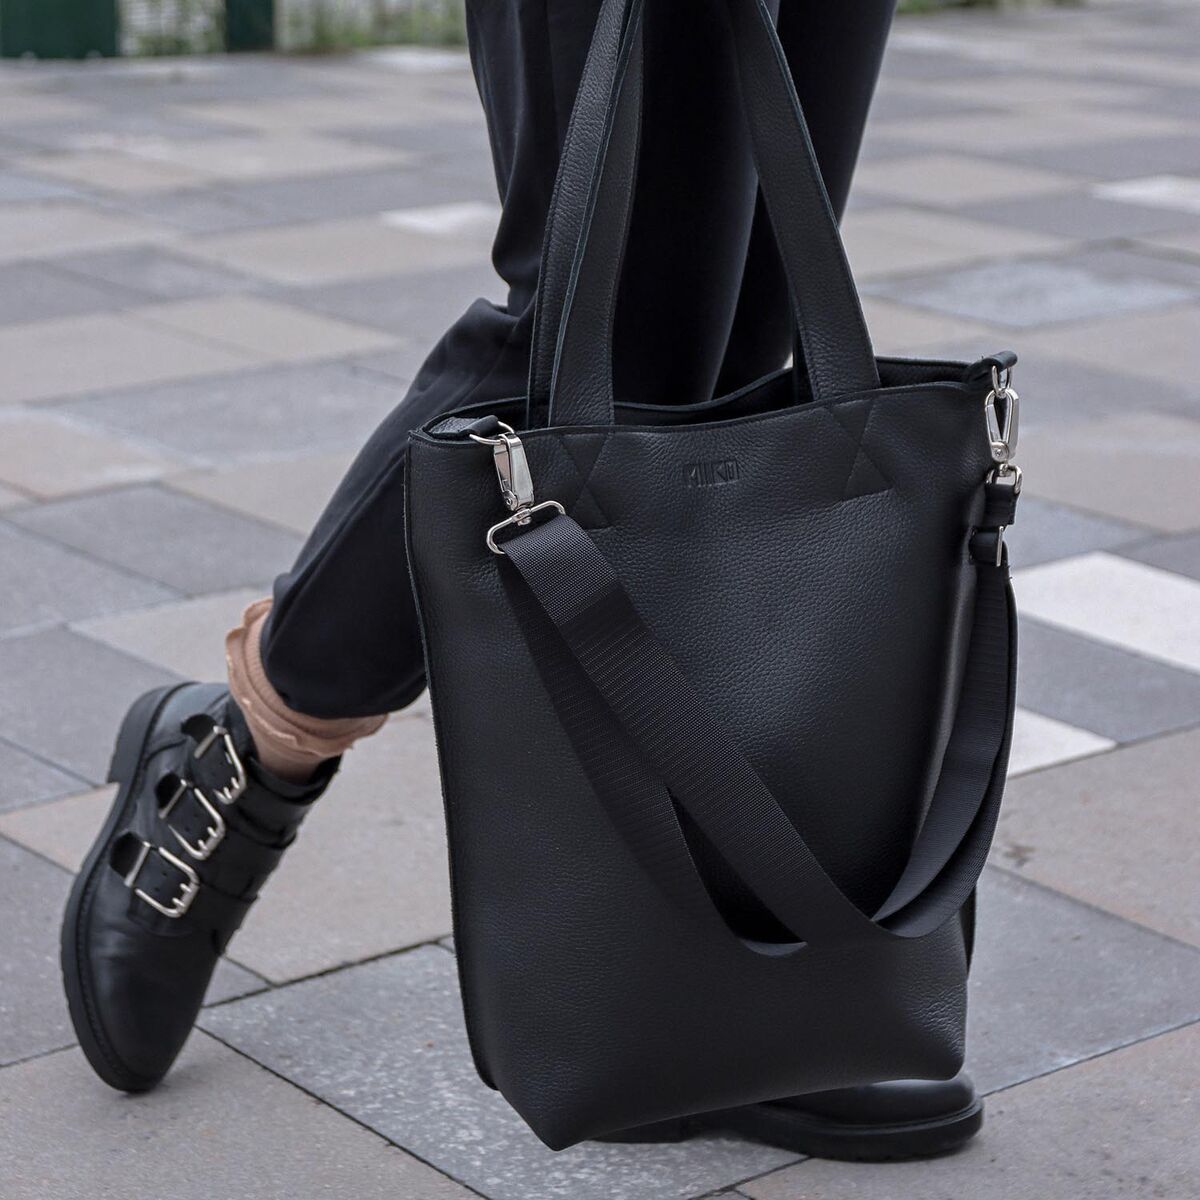 Miiko Sola Leather Bag Black